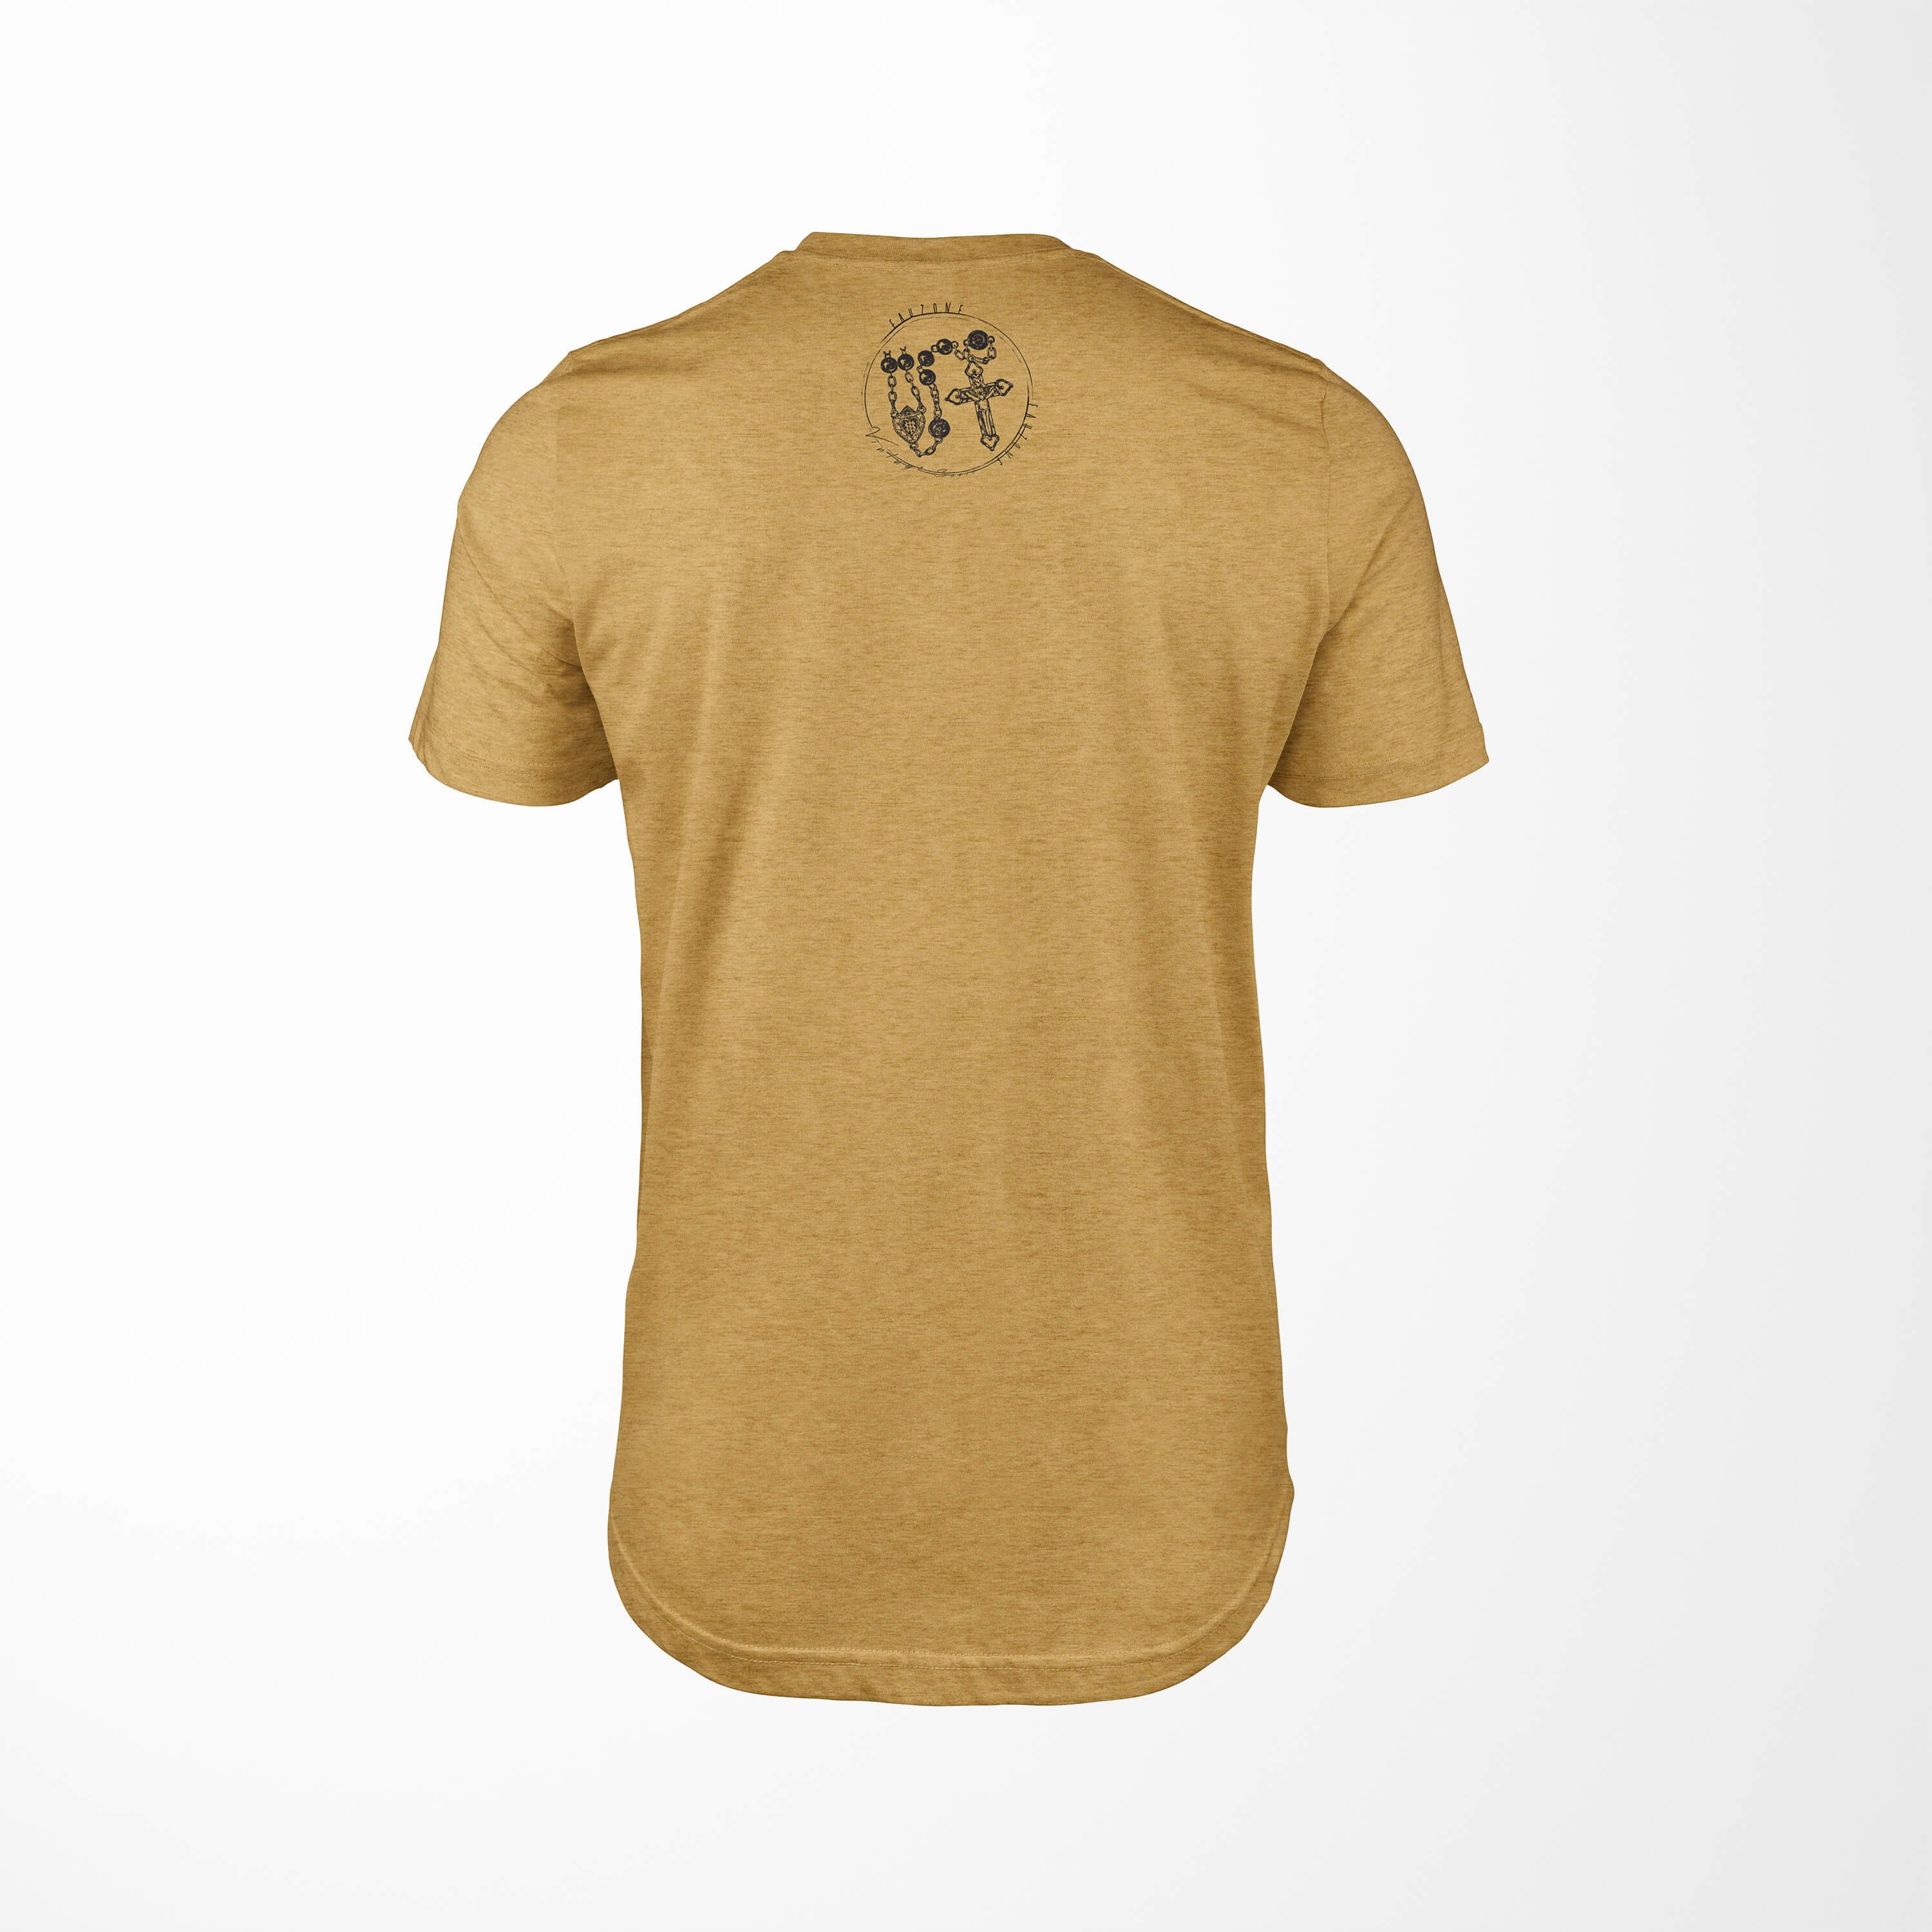 Sinus Herren Vintage T-Shirt Rosenkranz Antique Gold T-Shirt Art